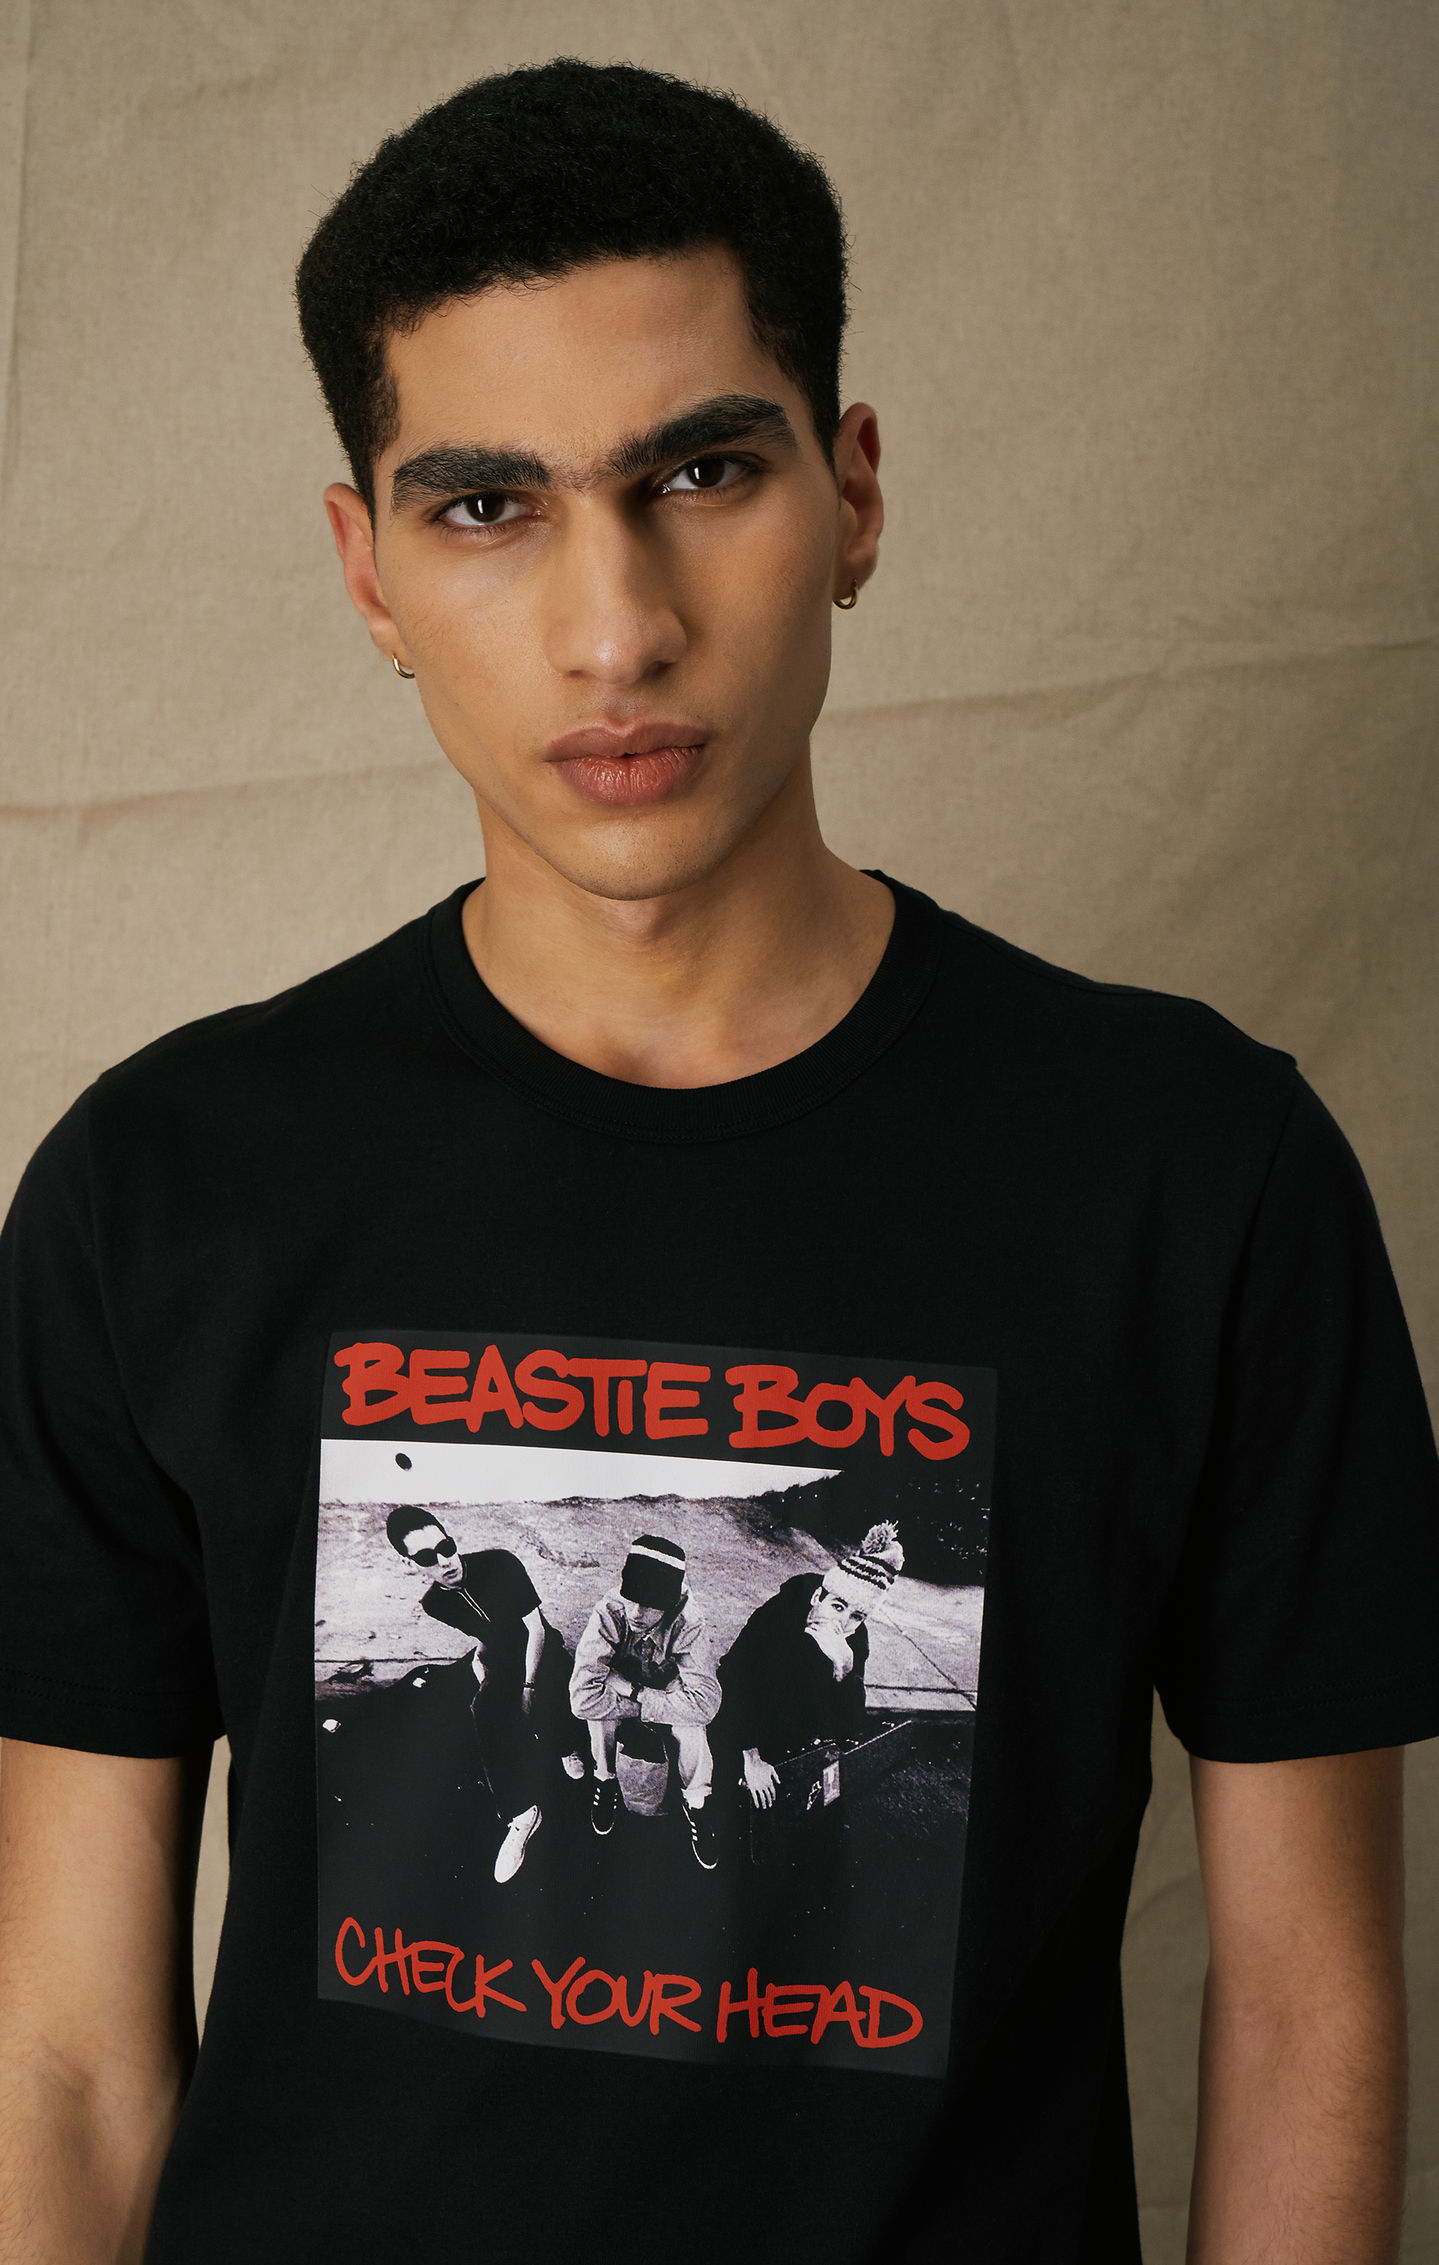 Champion X Beastie Boys Check Your Head Anniversary T-Shirt